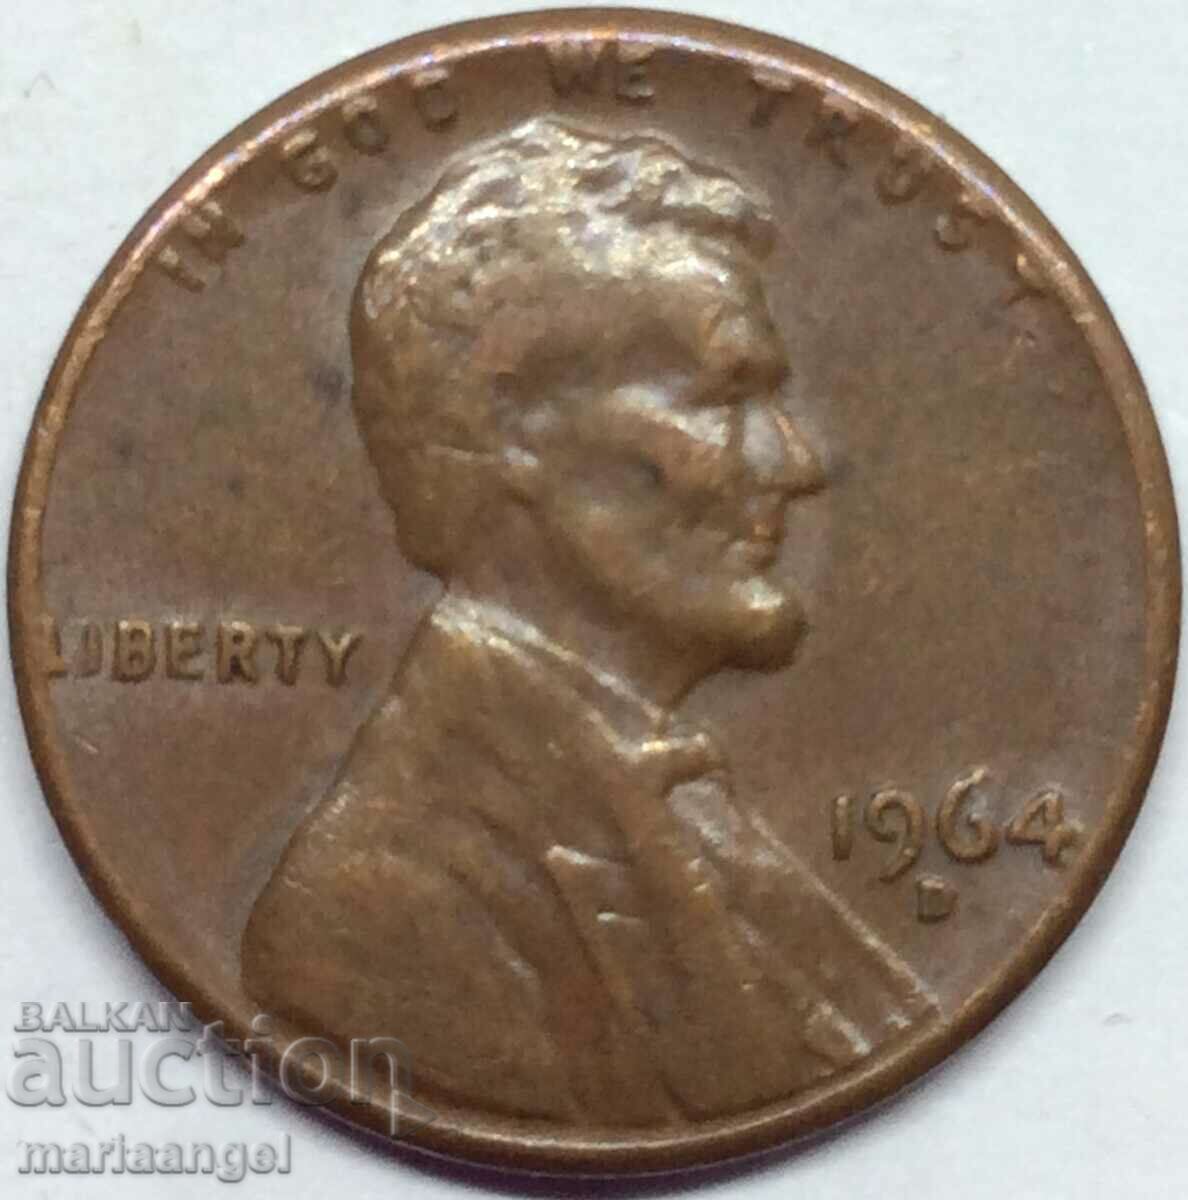 1 cent 1964 USA President Lincoln